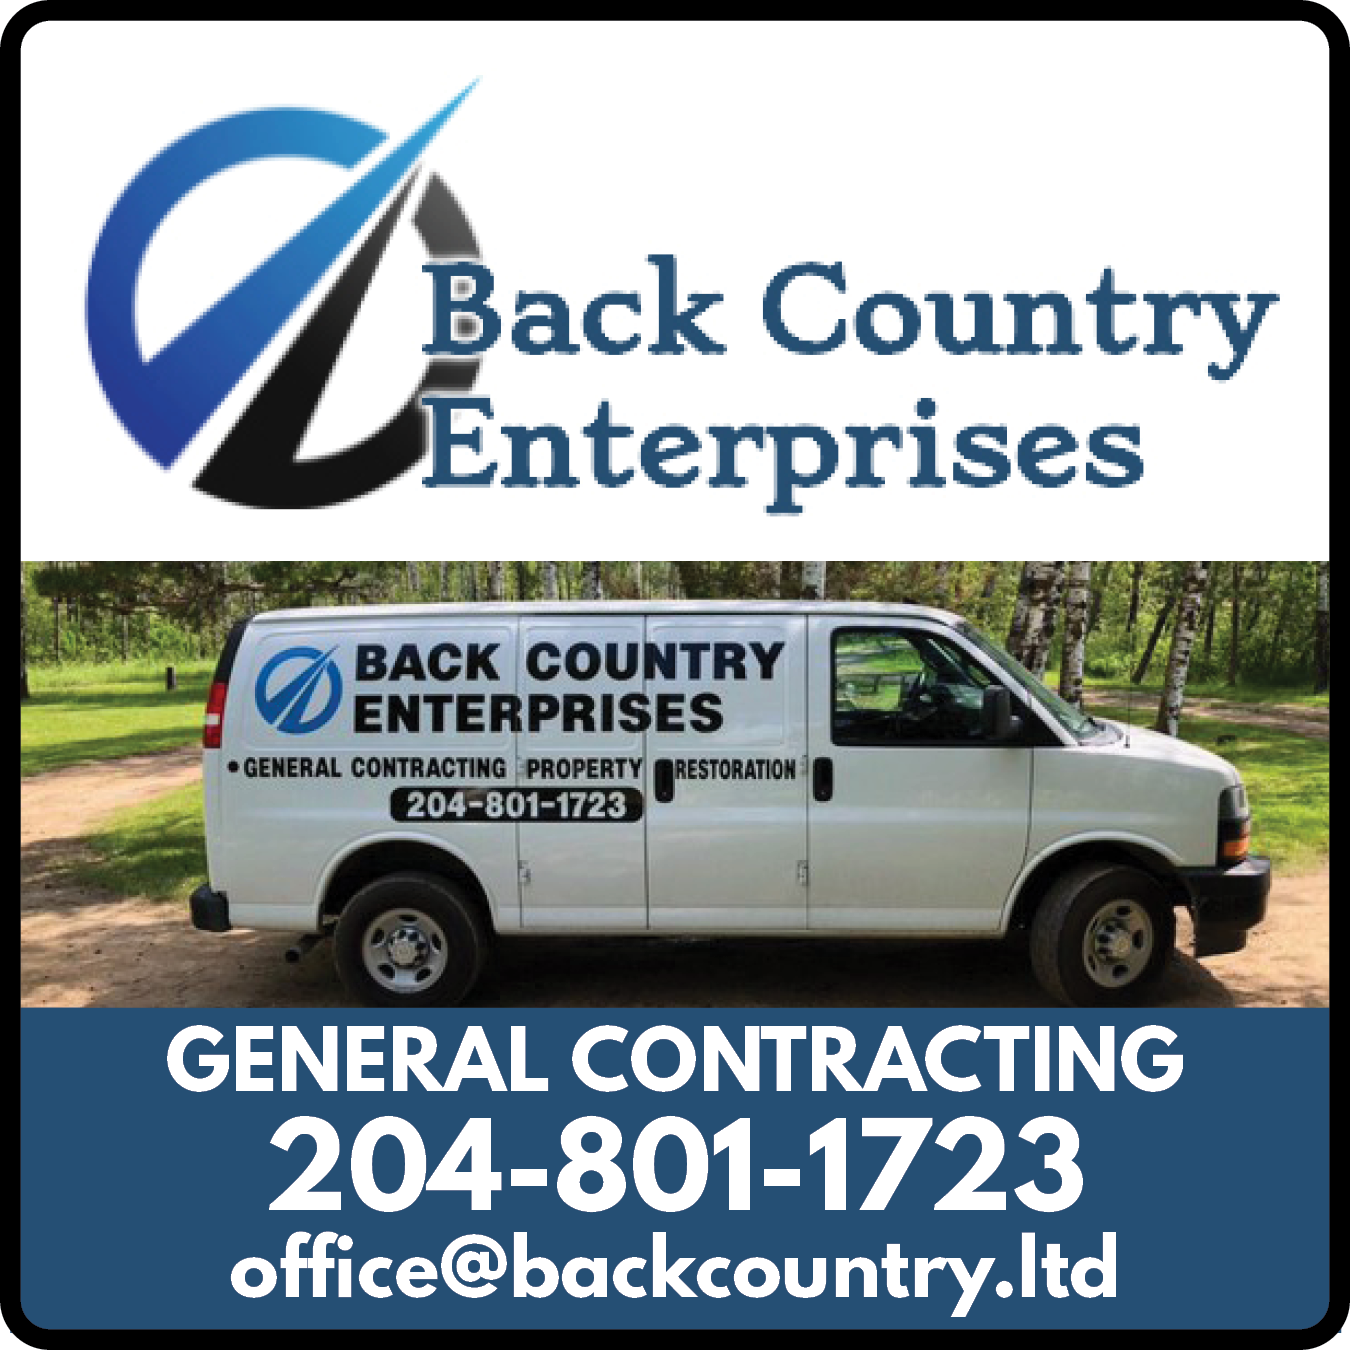 BCE Back Country Enterprises Ltd